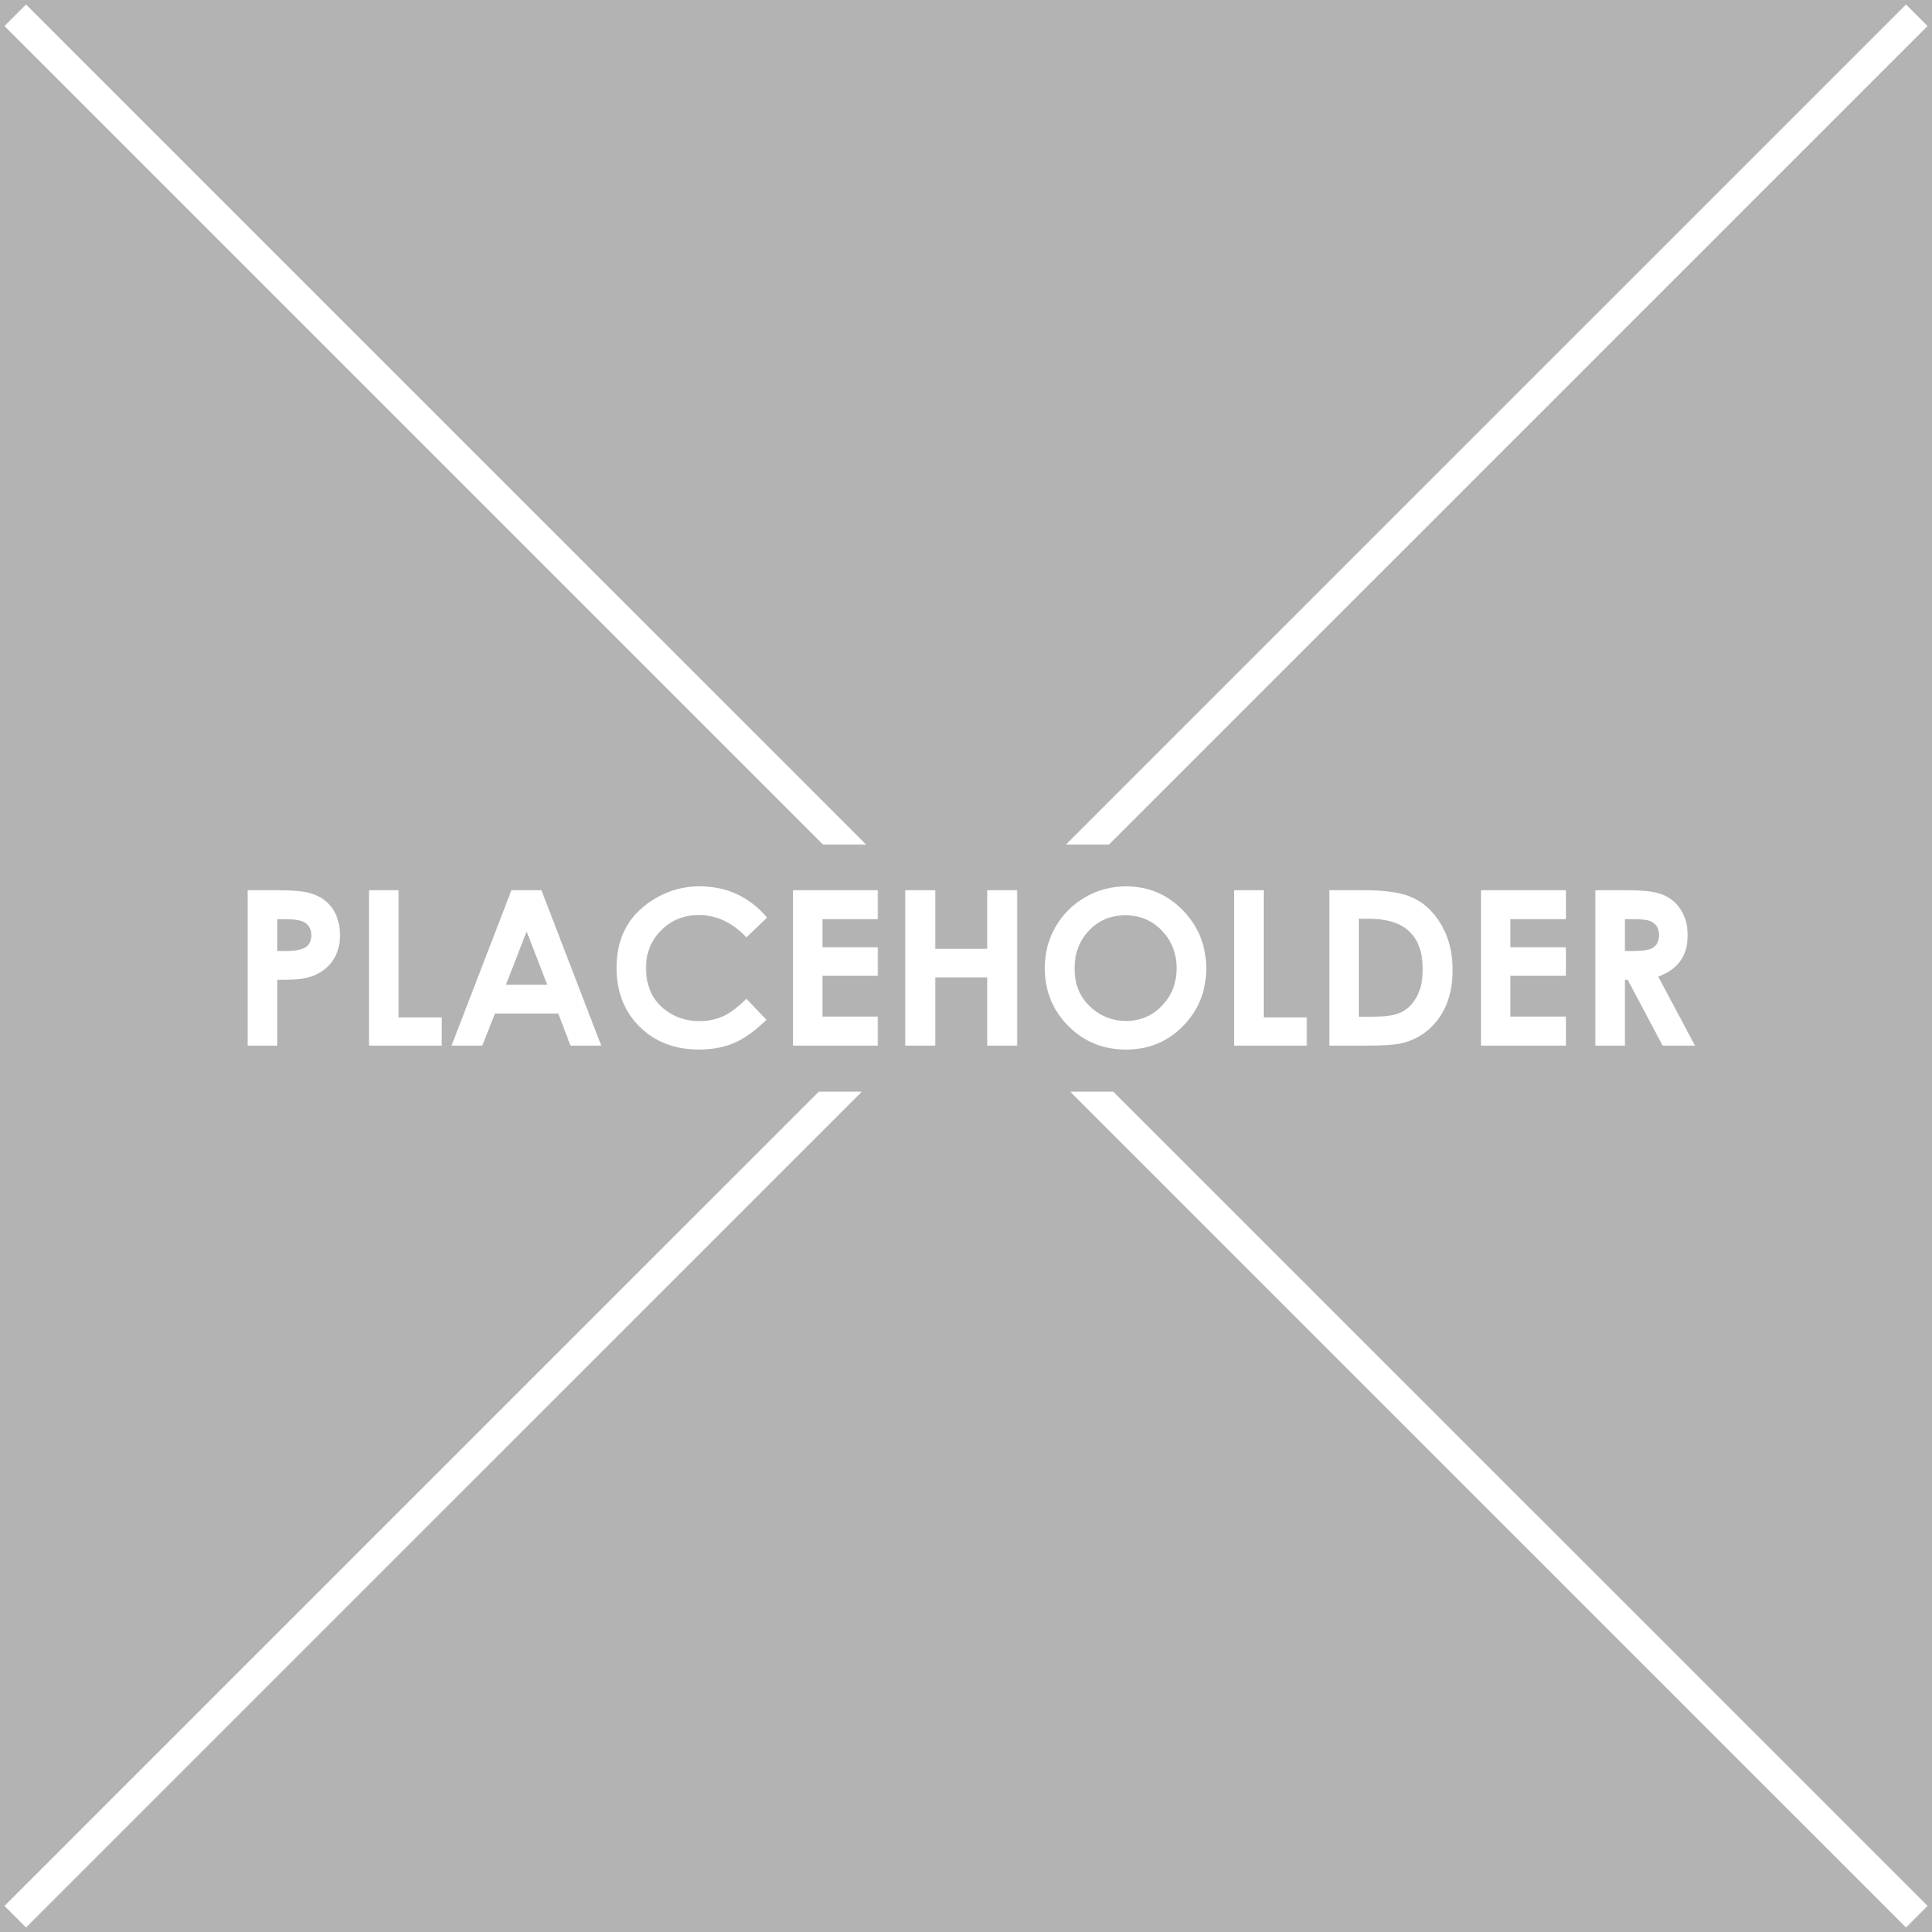 Placeholder copy 5.png